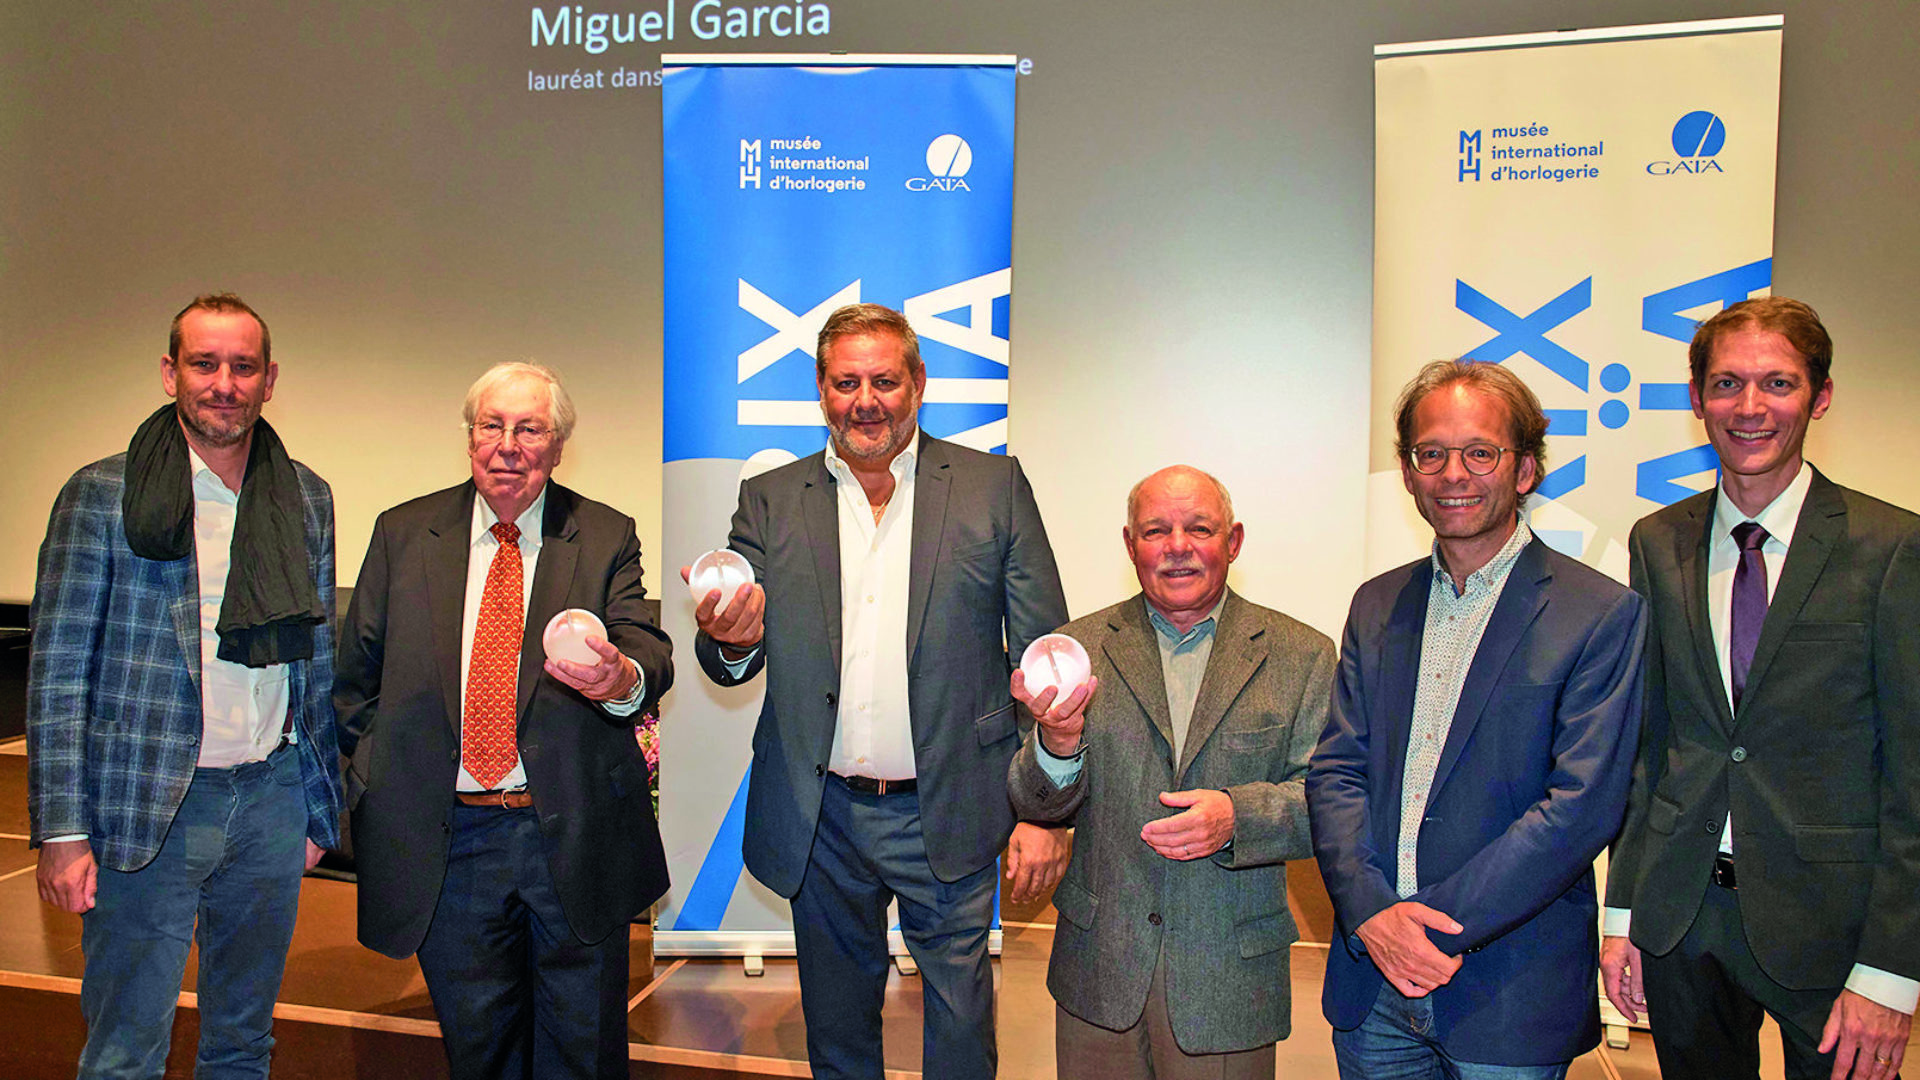 De gauche à droite, Jean-Daniel Jeanneret, Hans Boeckh, Miguel Garcia, Georges Brodbeck, Théo Bregnard, Régis Huguenin-dumittan. (Photo MIH, V. Savanyu)